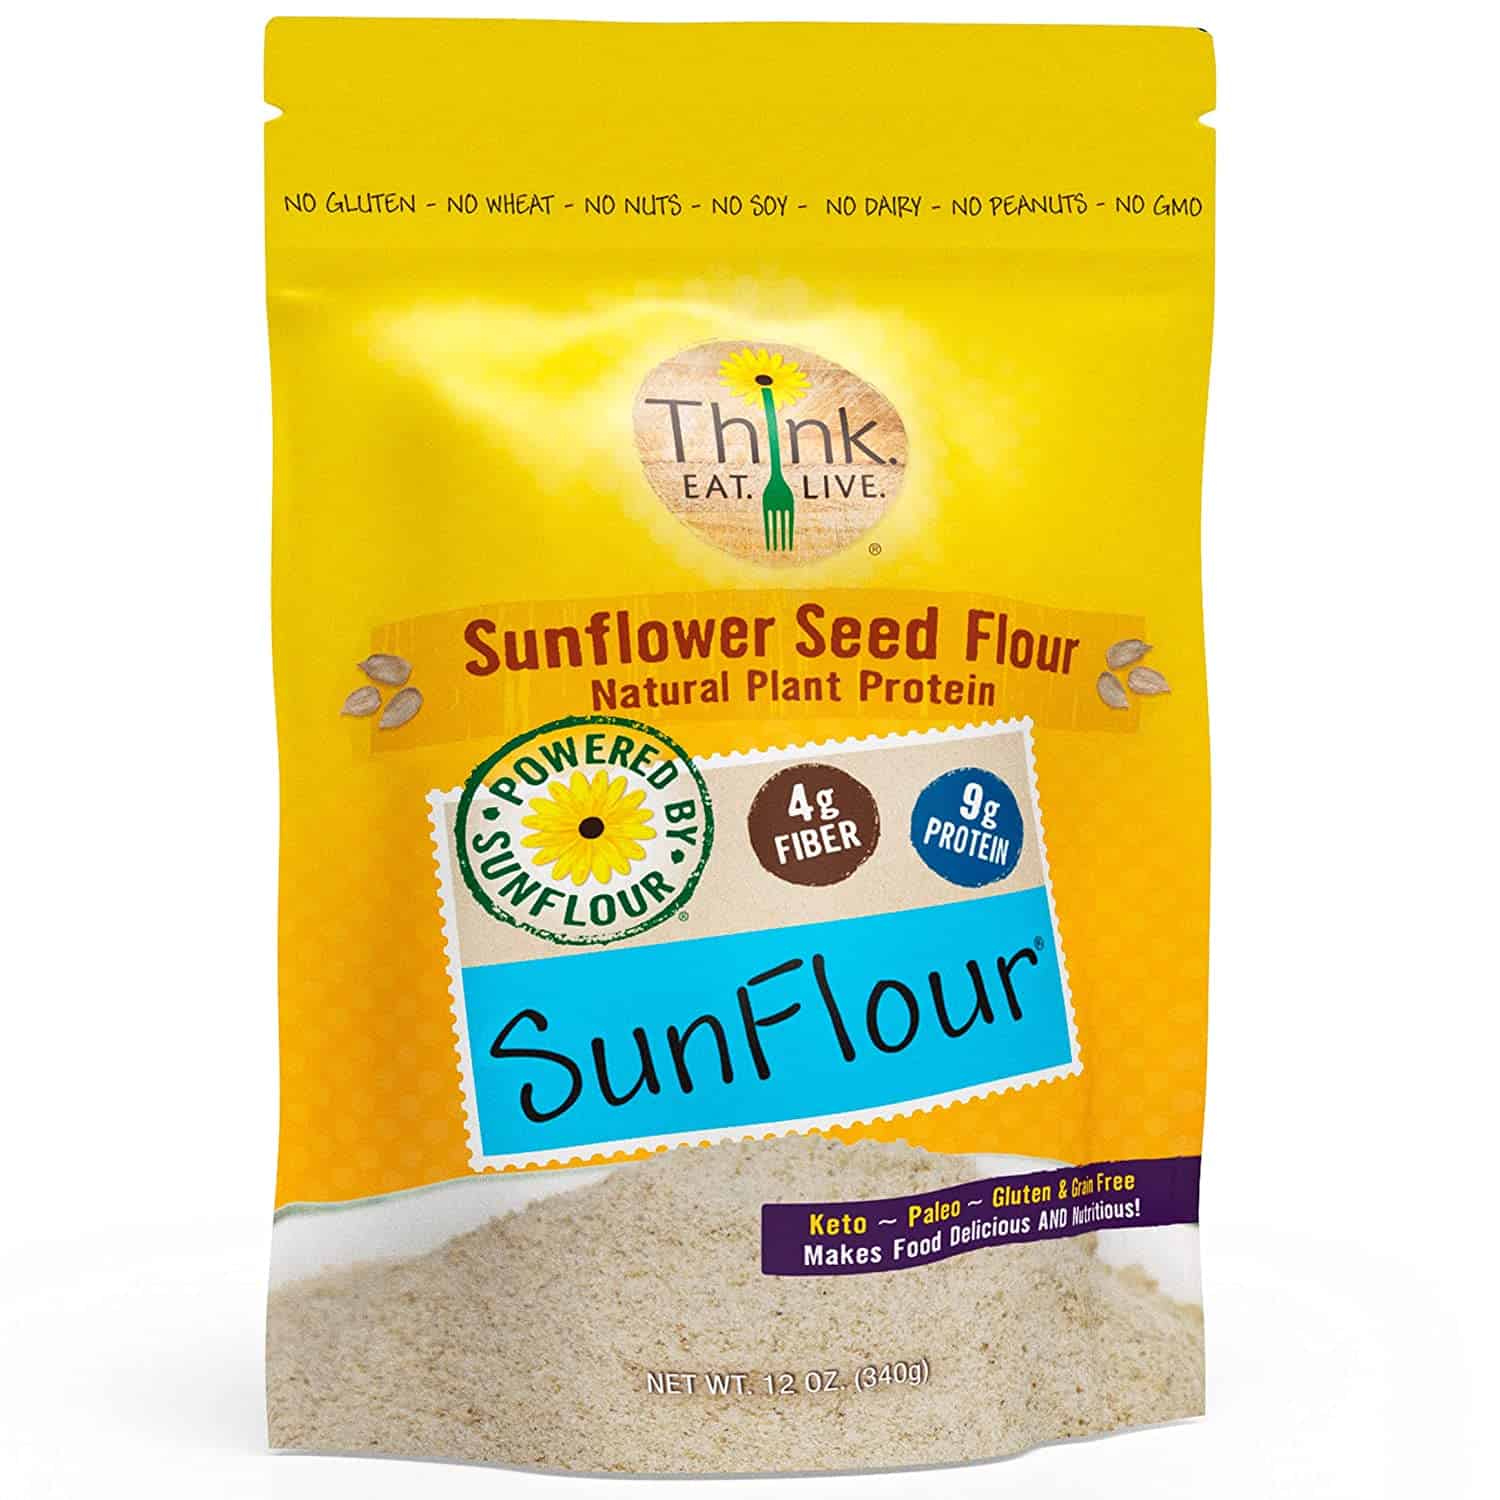 Good substitute for coconut flour is sunflower seed flour